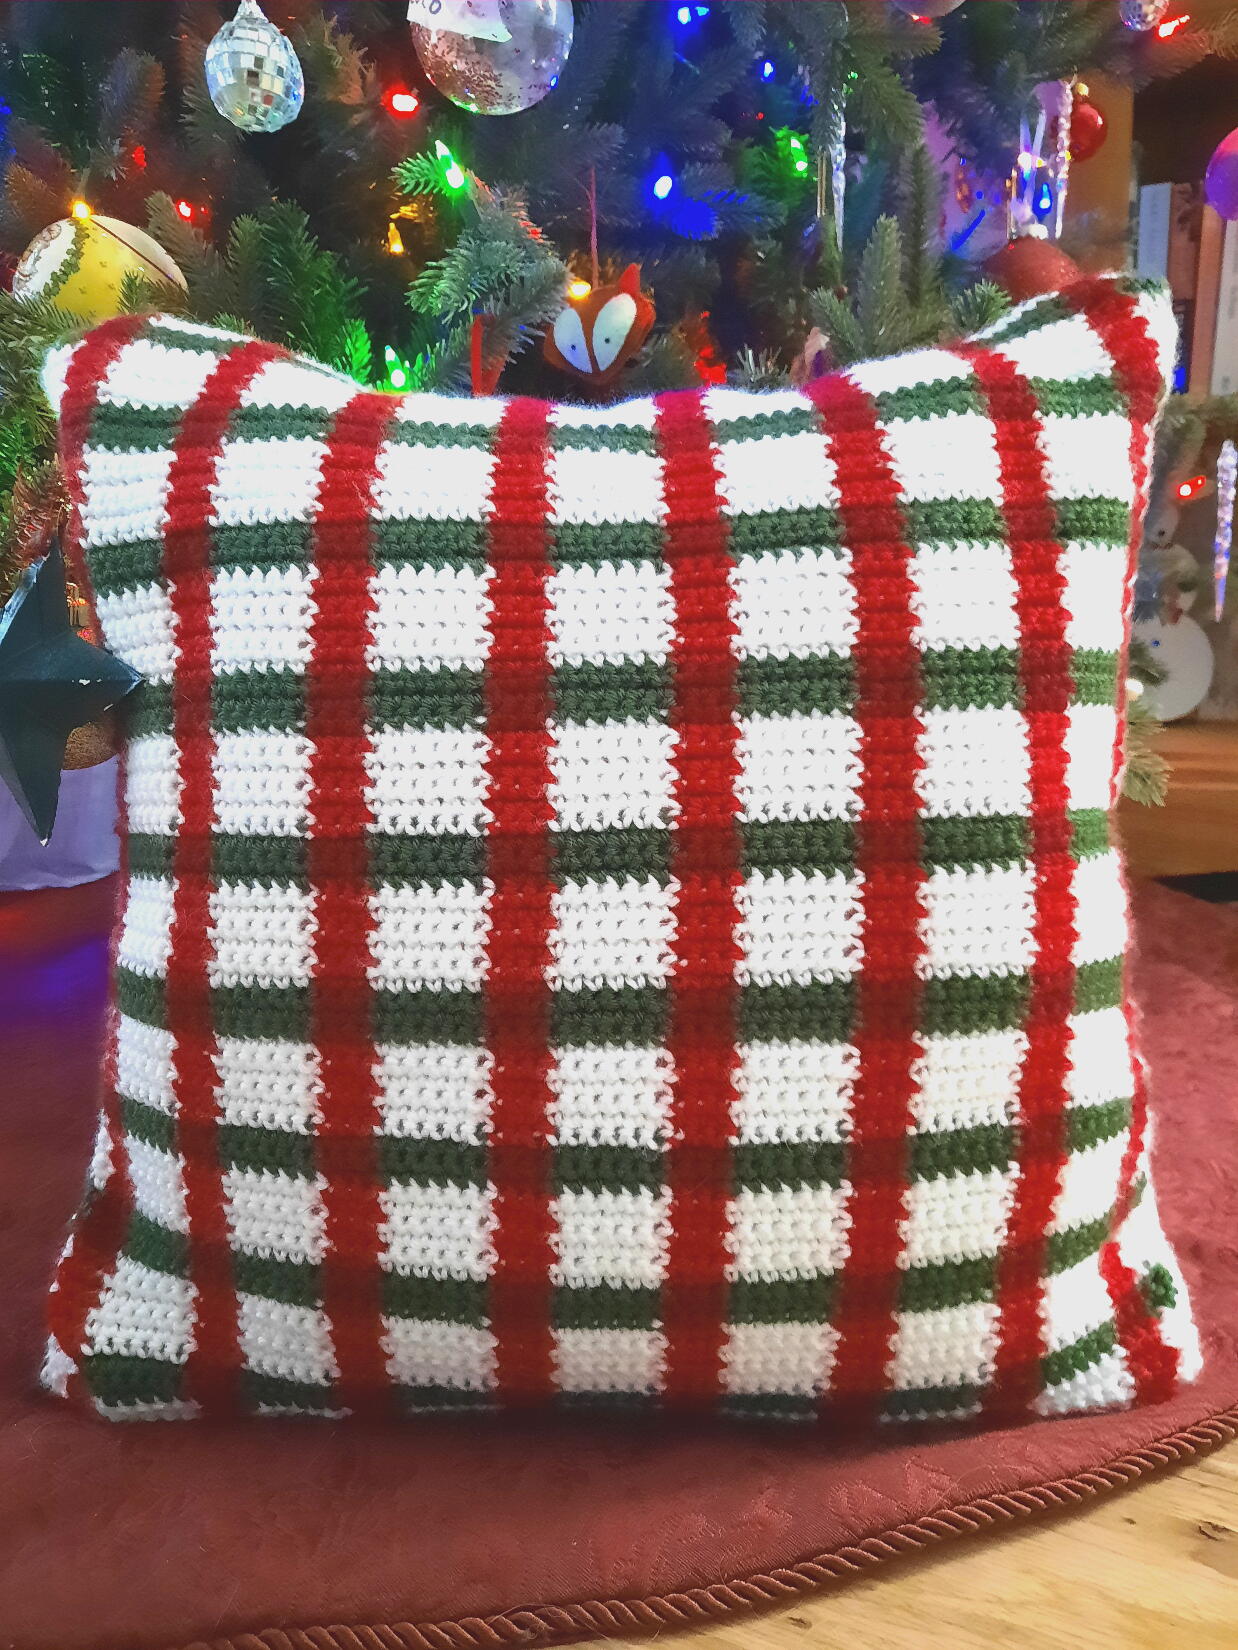 crochet holiday pillwos case